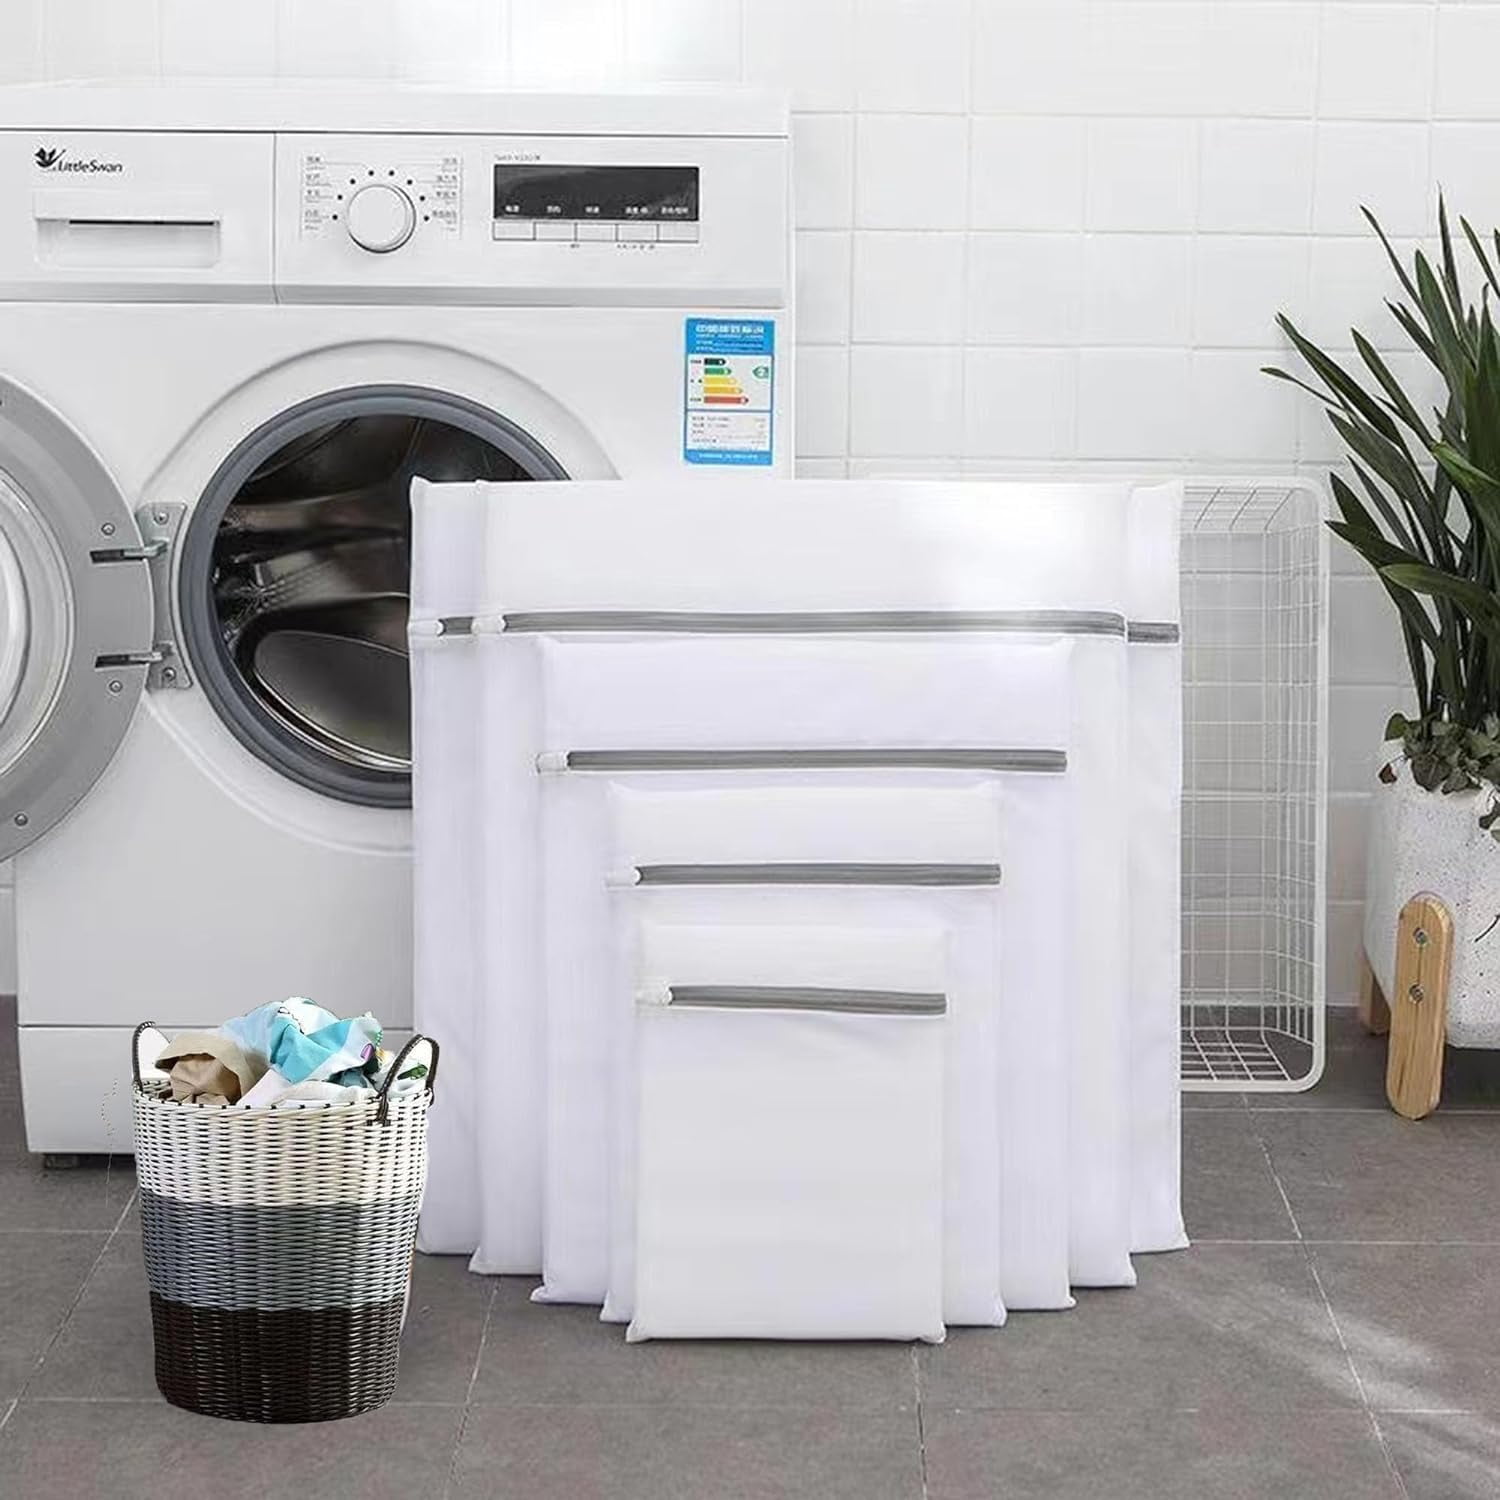 AllTopBargains 2 Delicate Laundry Washing Mesh Net Wash Bag